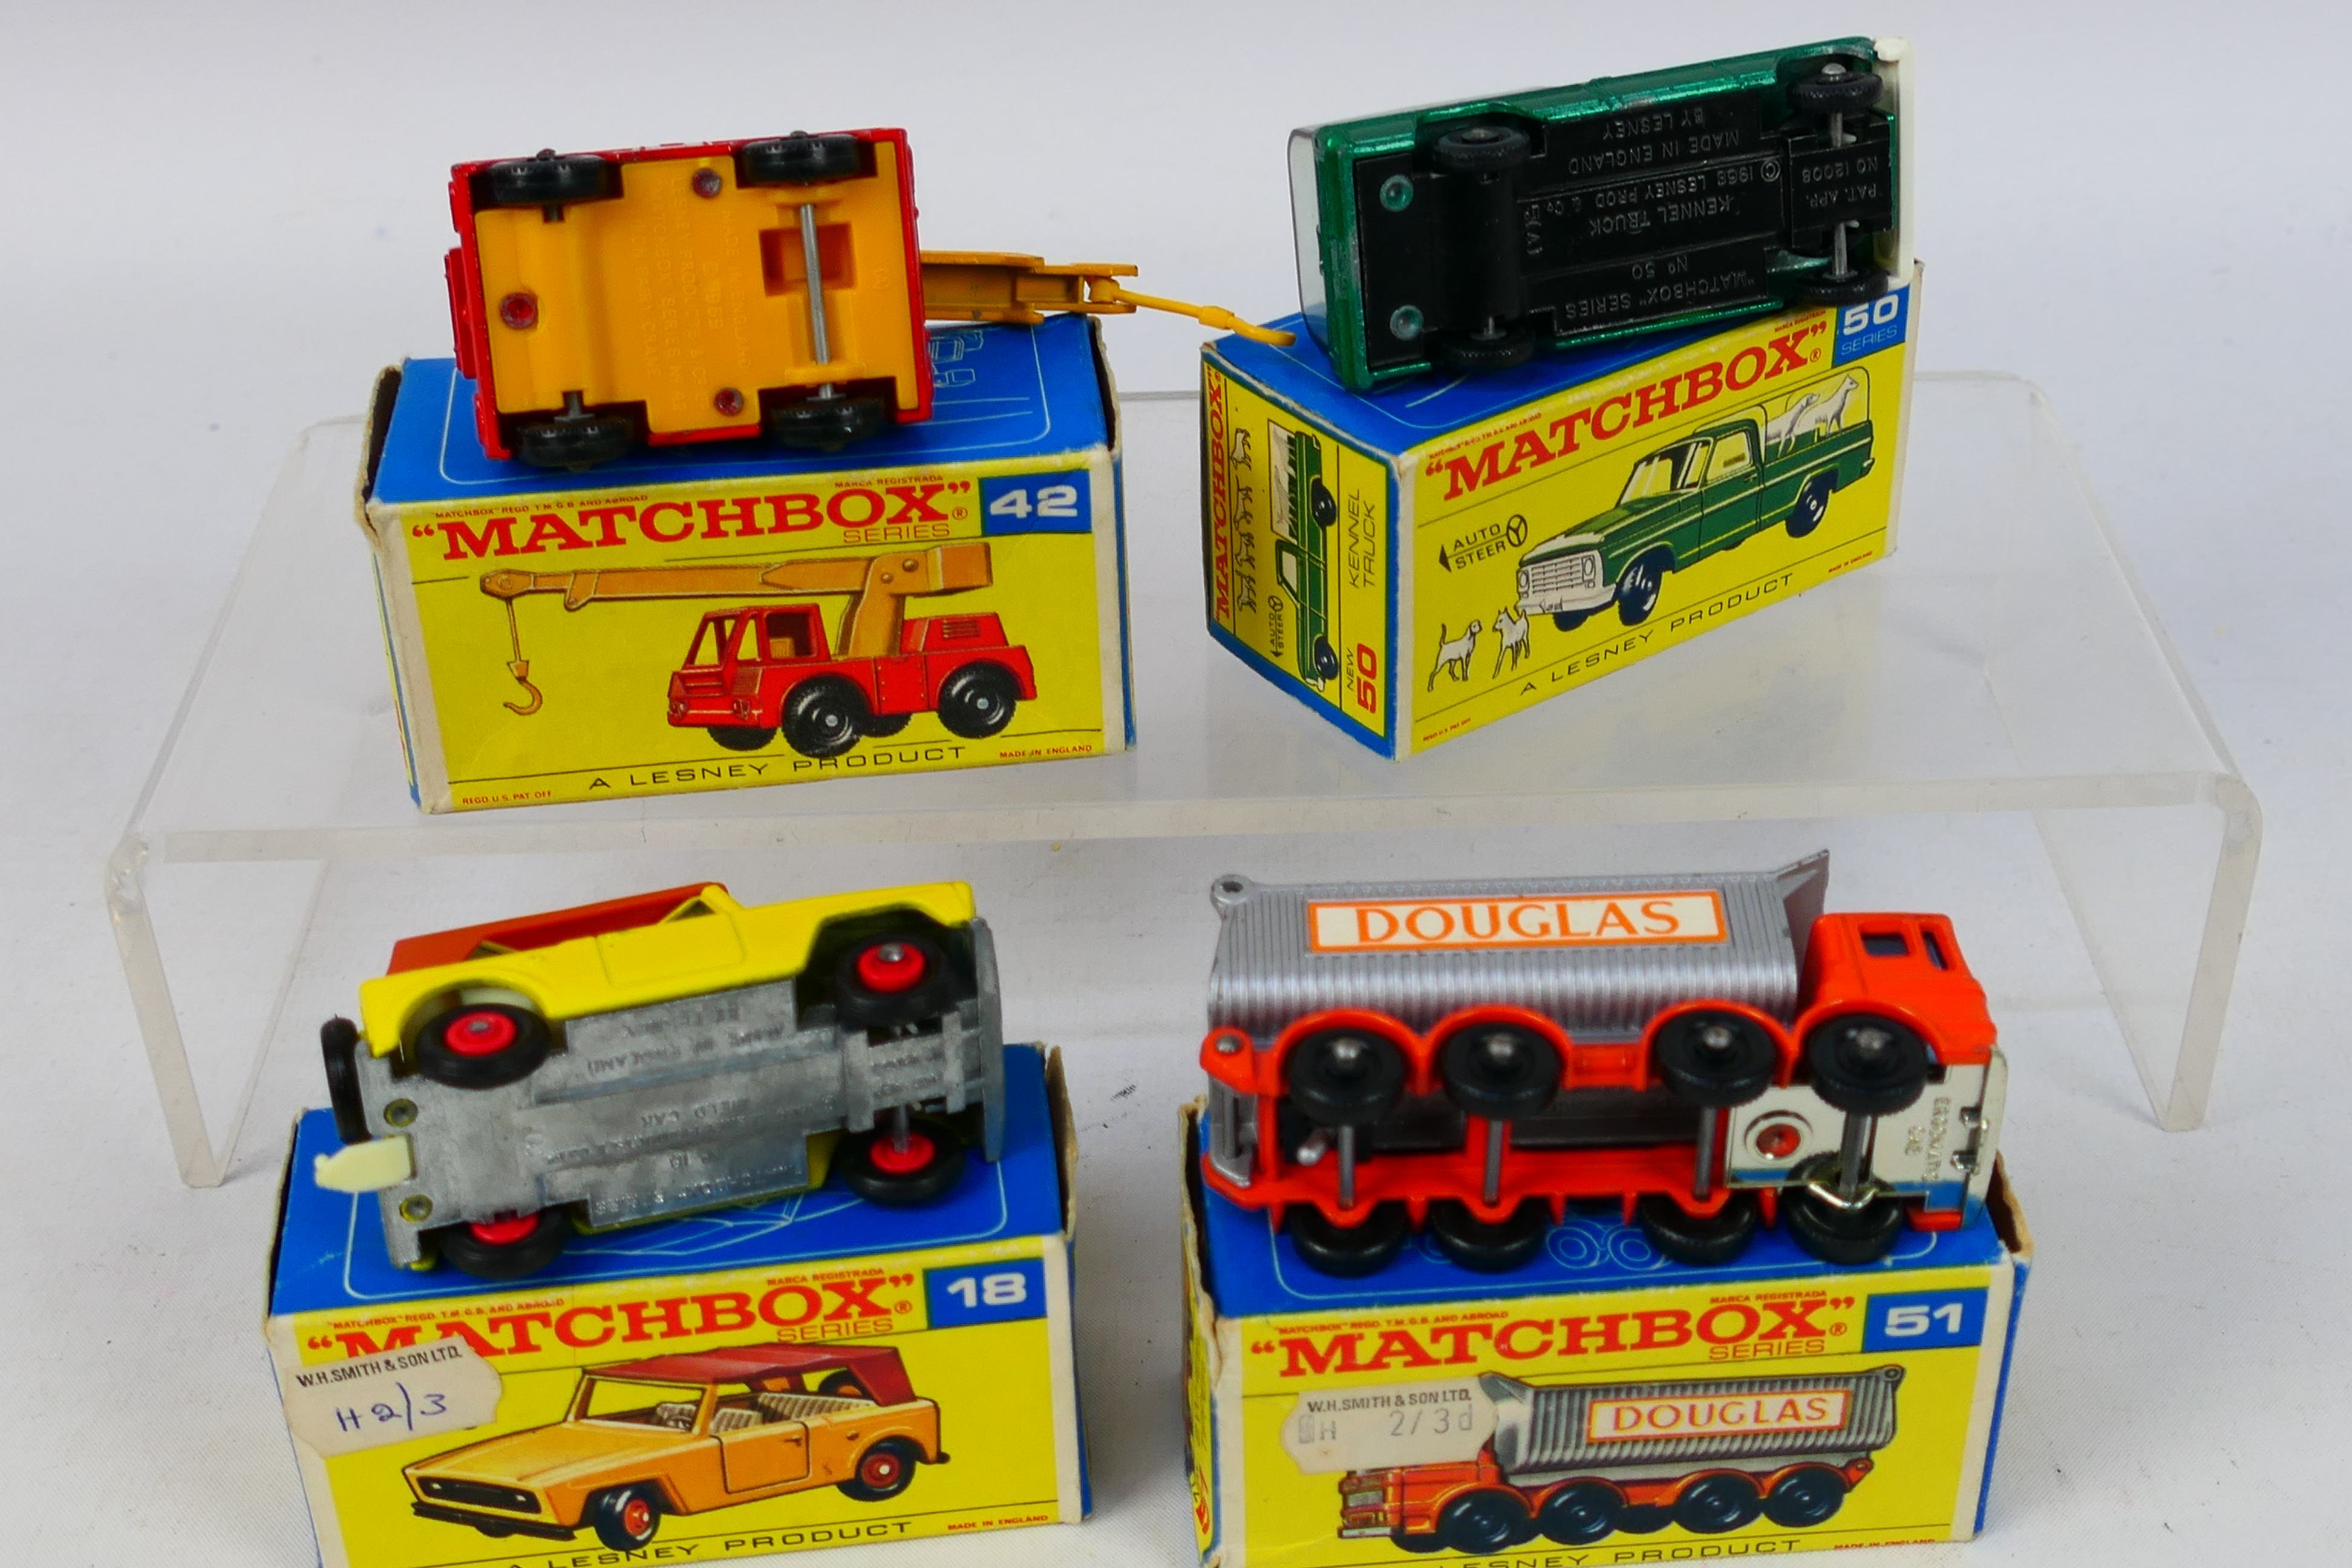 Matchbox - Regular Wheels - 4 x boxed models, Field Car # 18, - Image 6 of 6